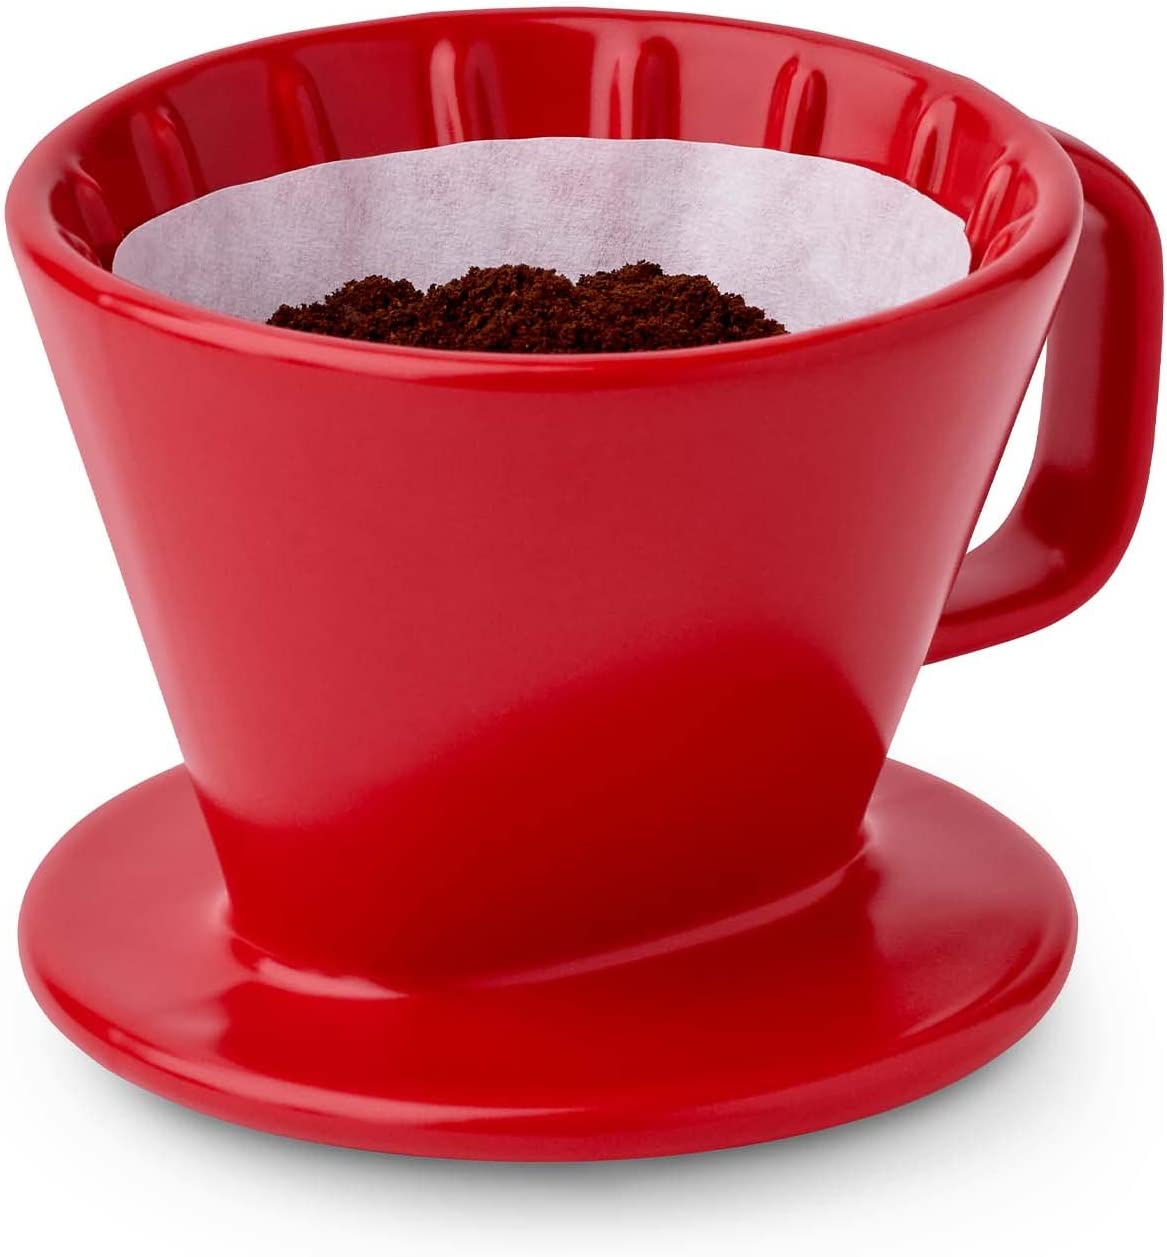 Tchibo Coffee Filter, Hand Filter, Hand Filter, Filter Size 101, Dishwasher Safe, Ceramic, Red